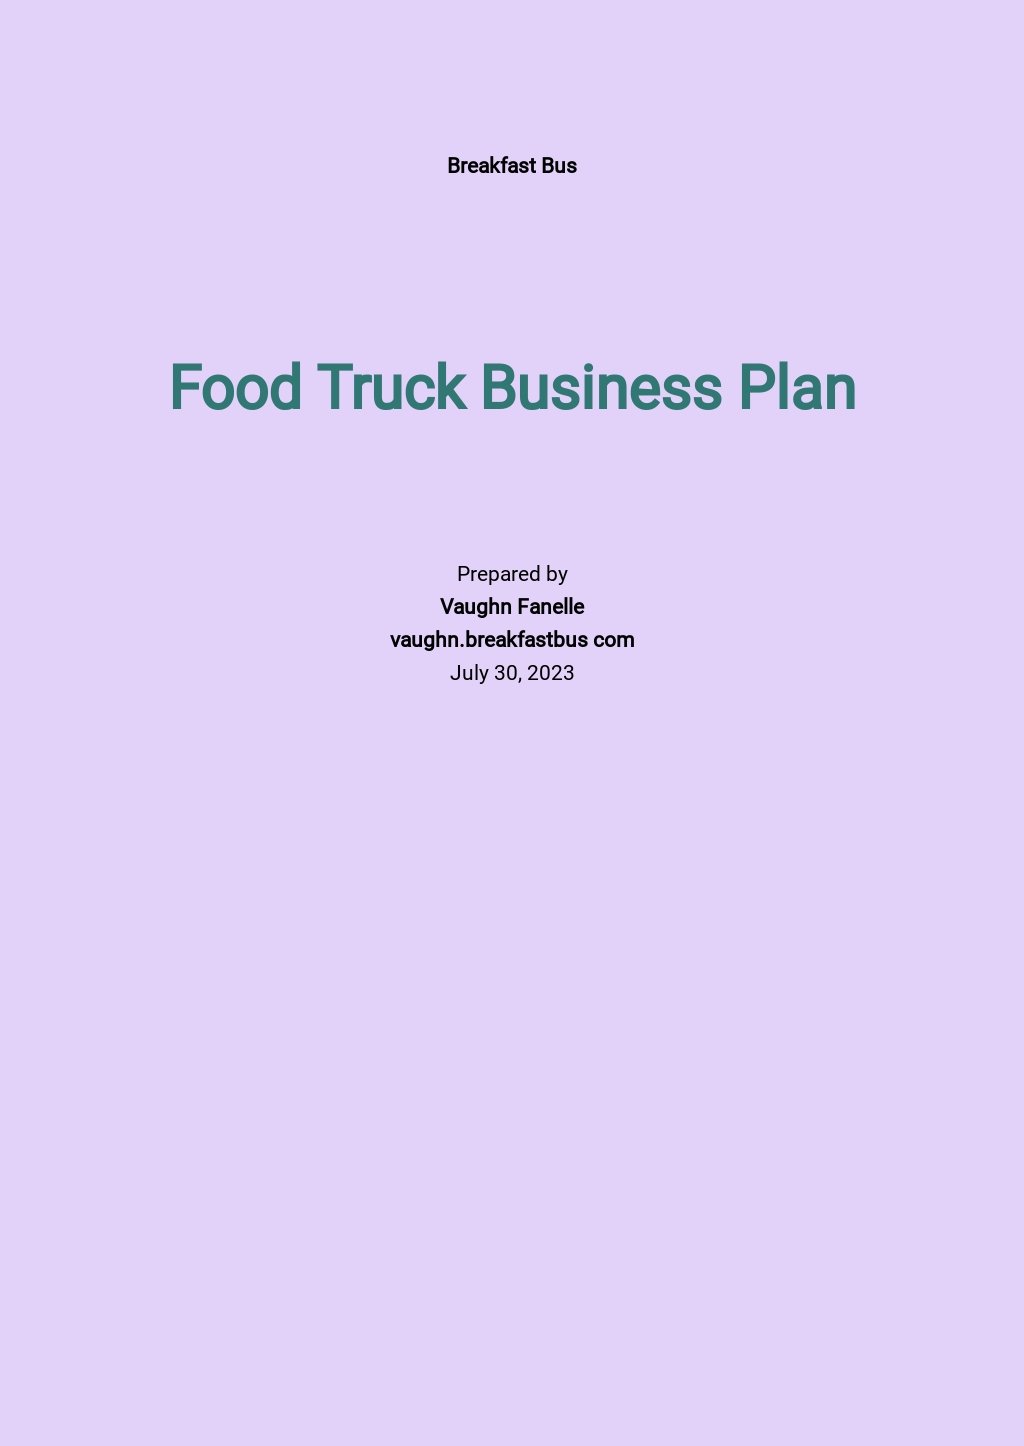 Food Truck Business Plan Template .jpe